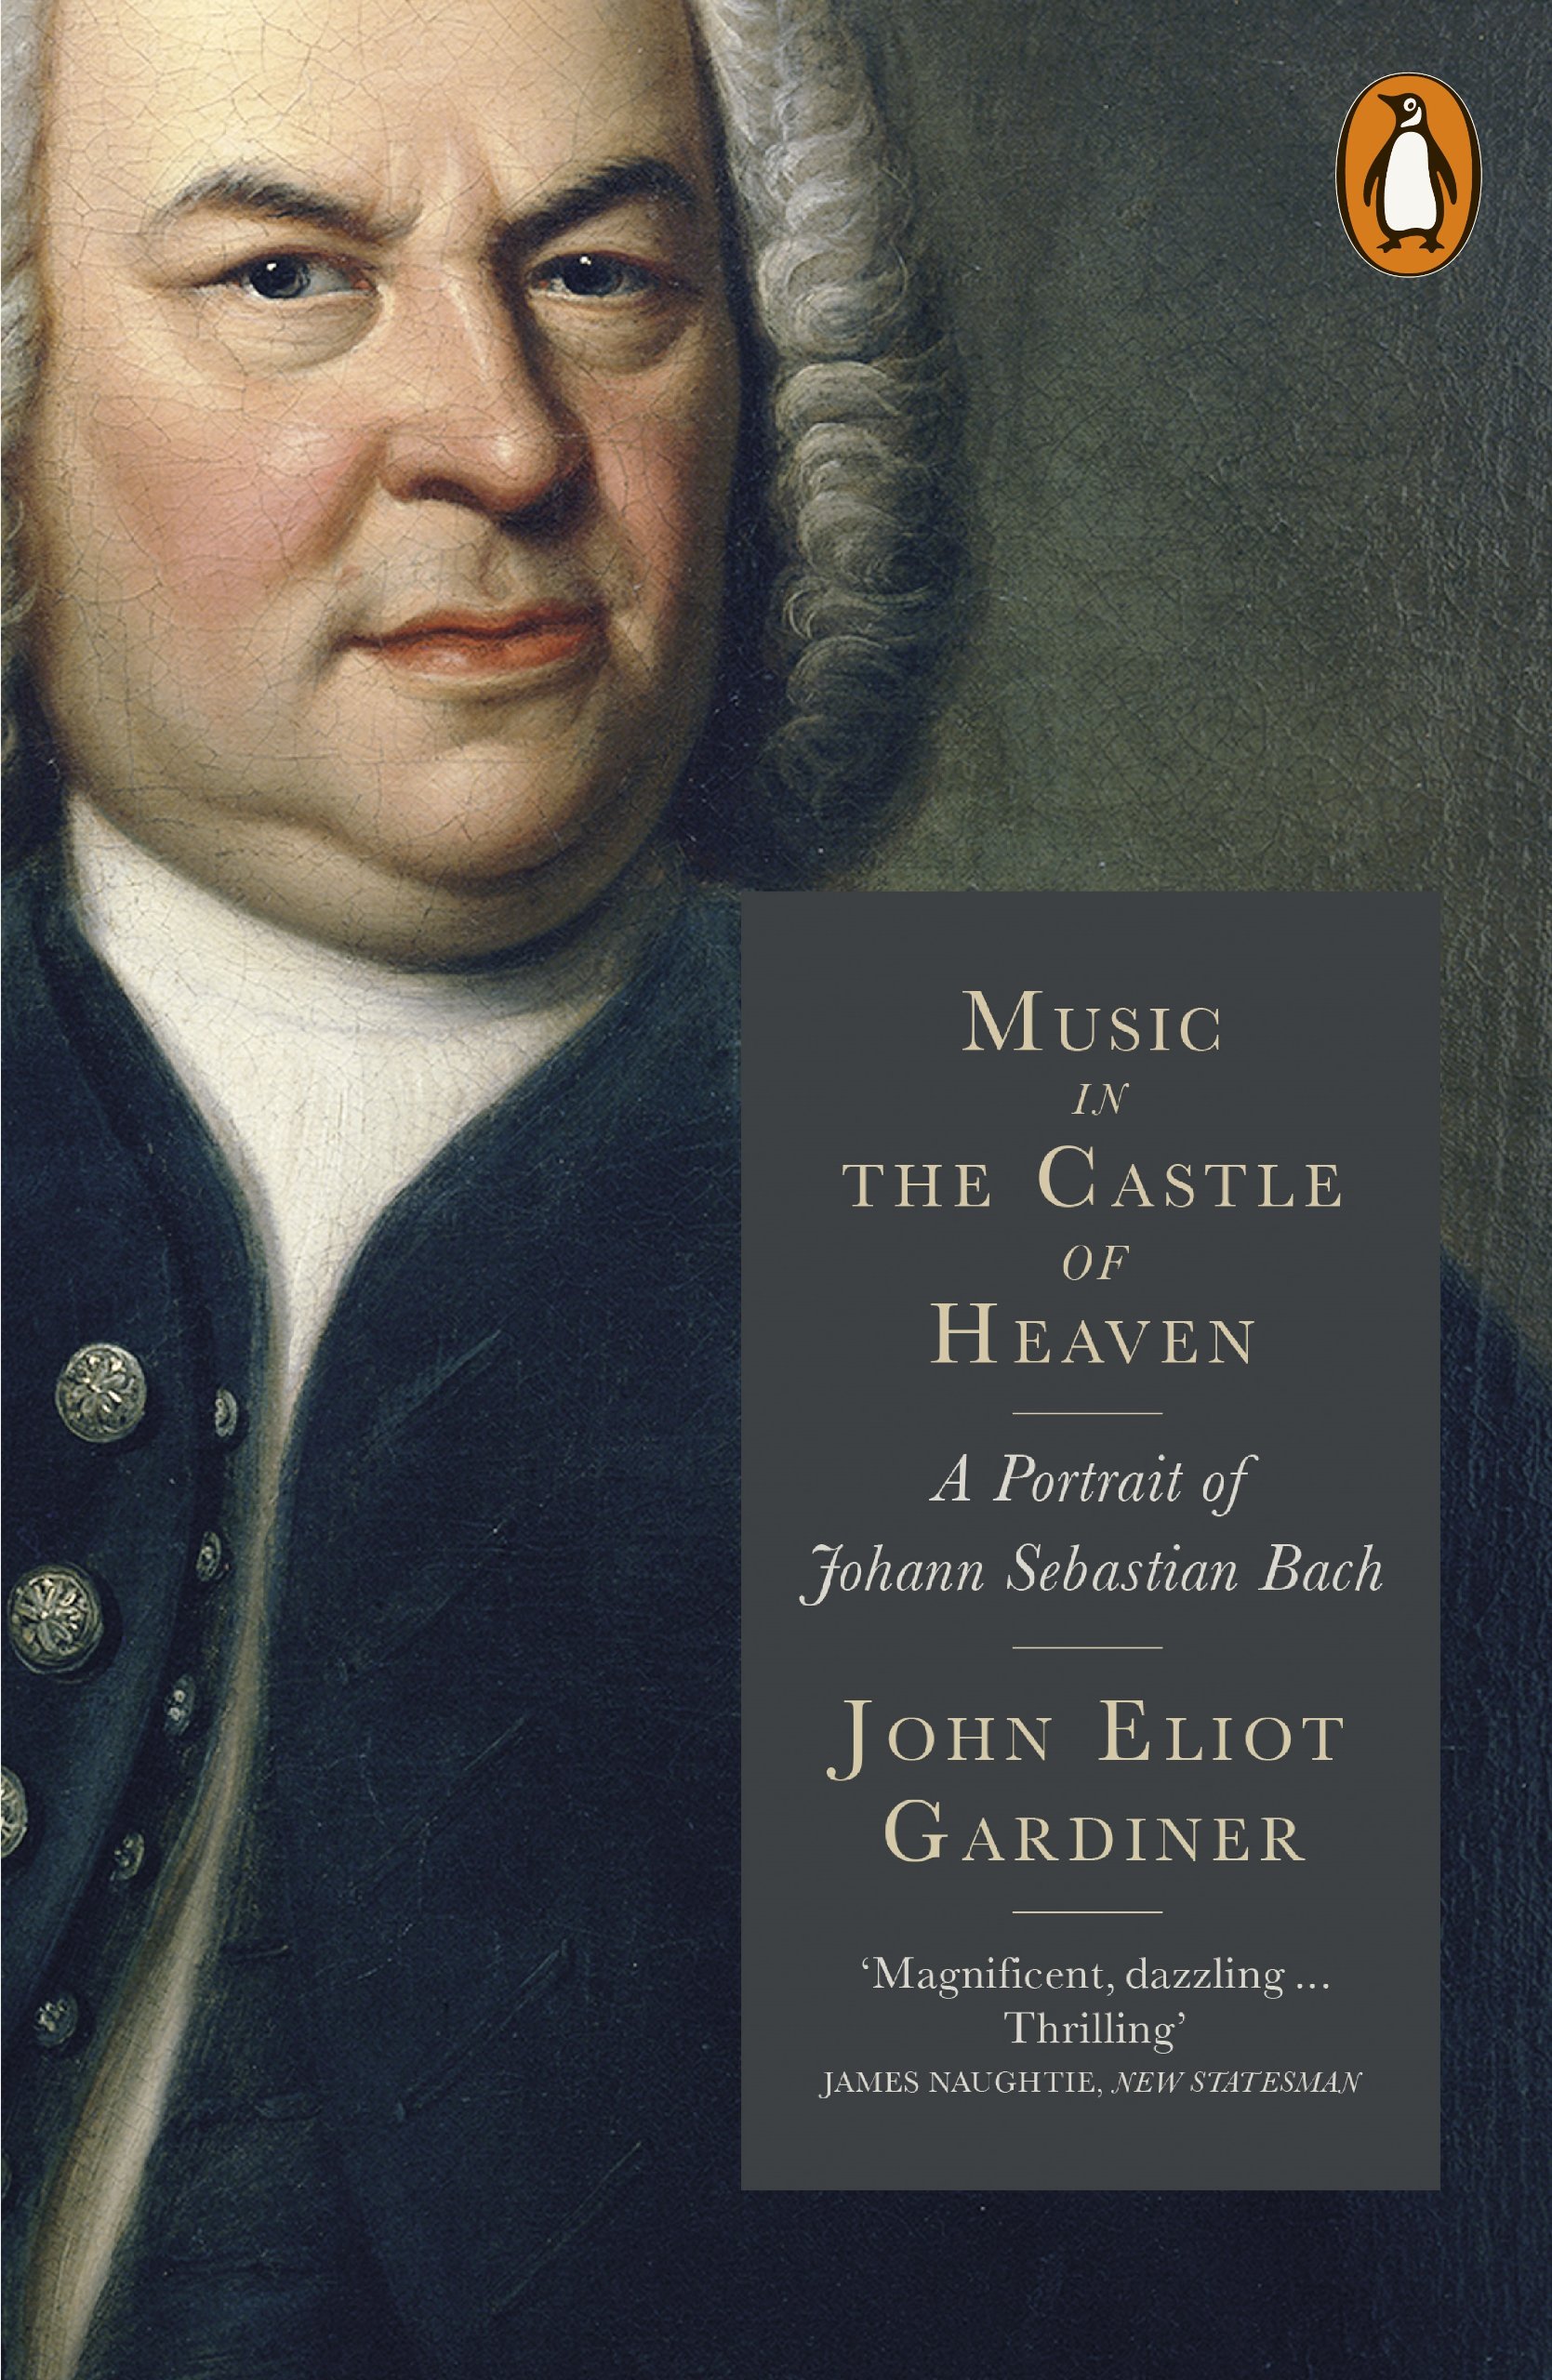 Johann Sebastian Bach: a detailed informative biography